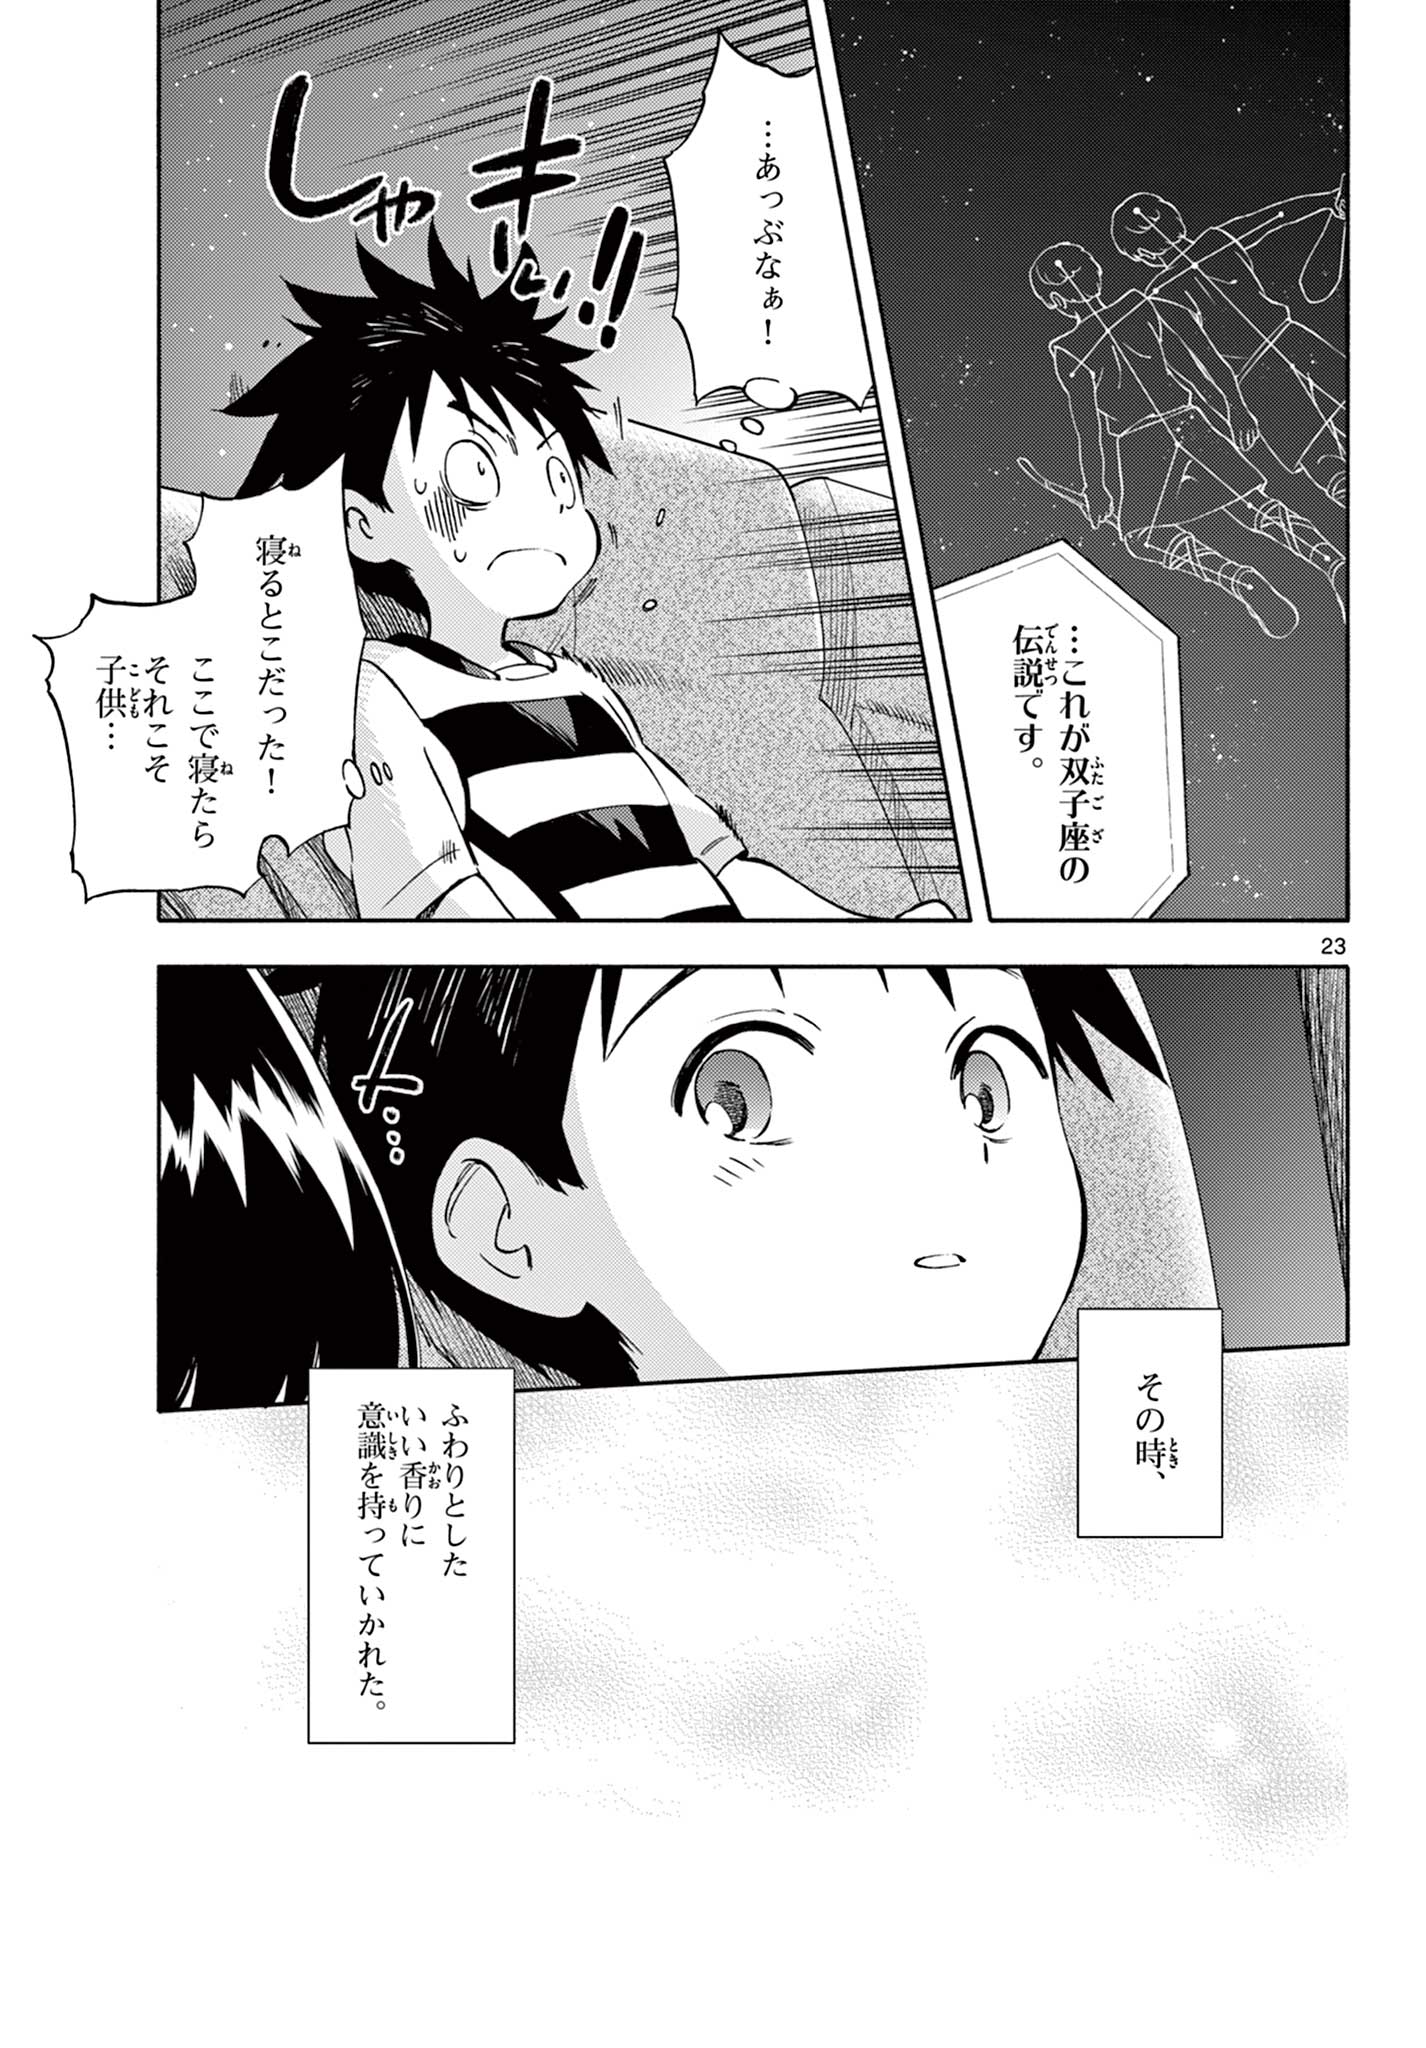 Nami no Shijima no Horizont - Chapter 15.2 - Page 8